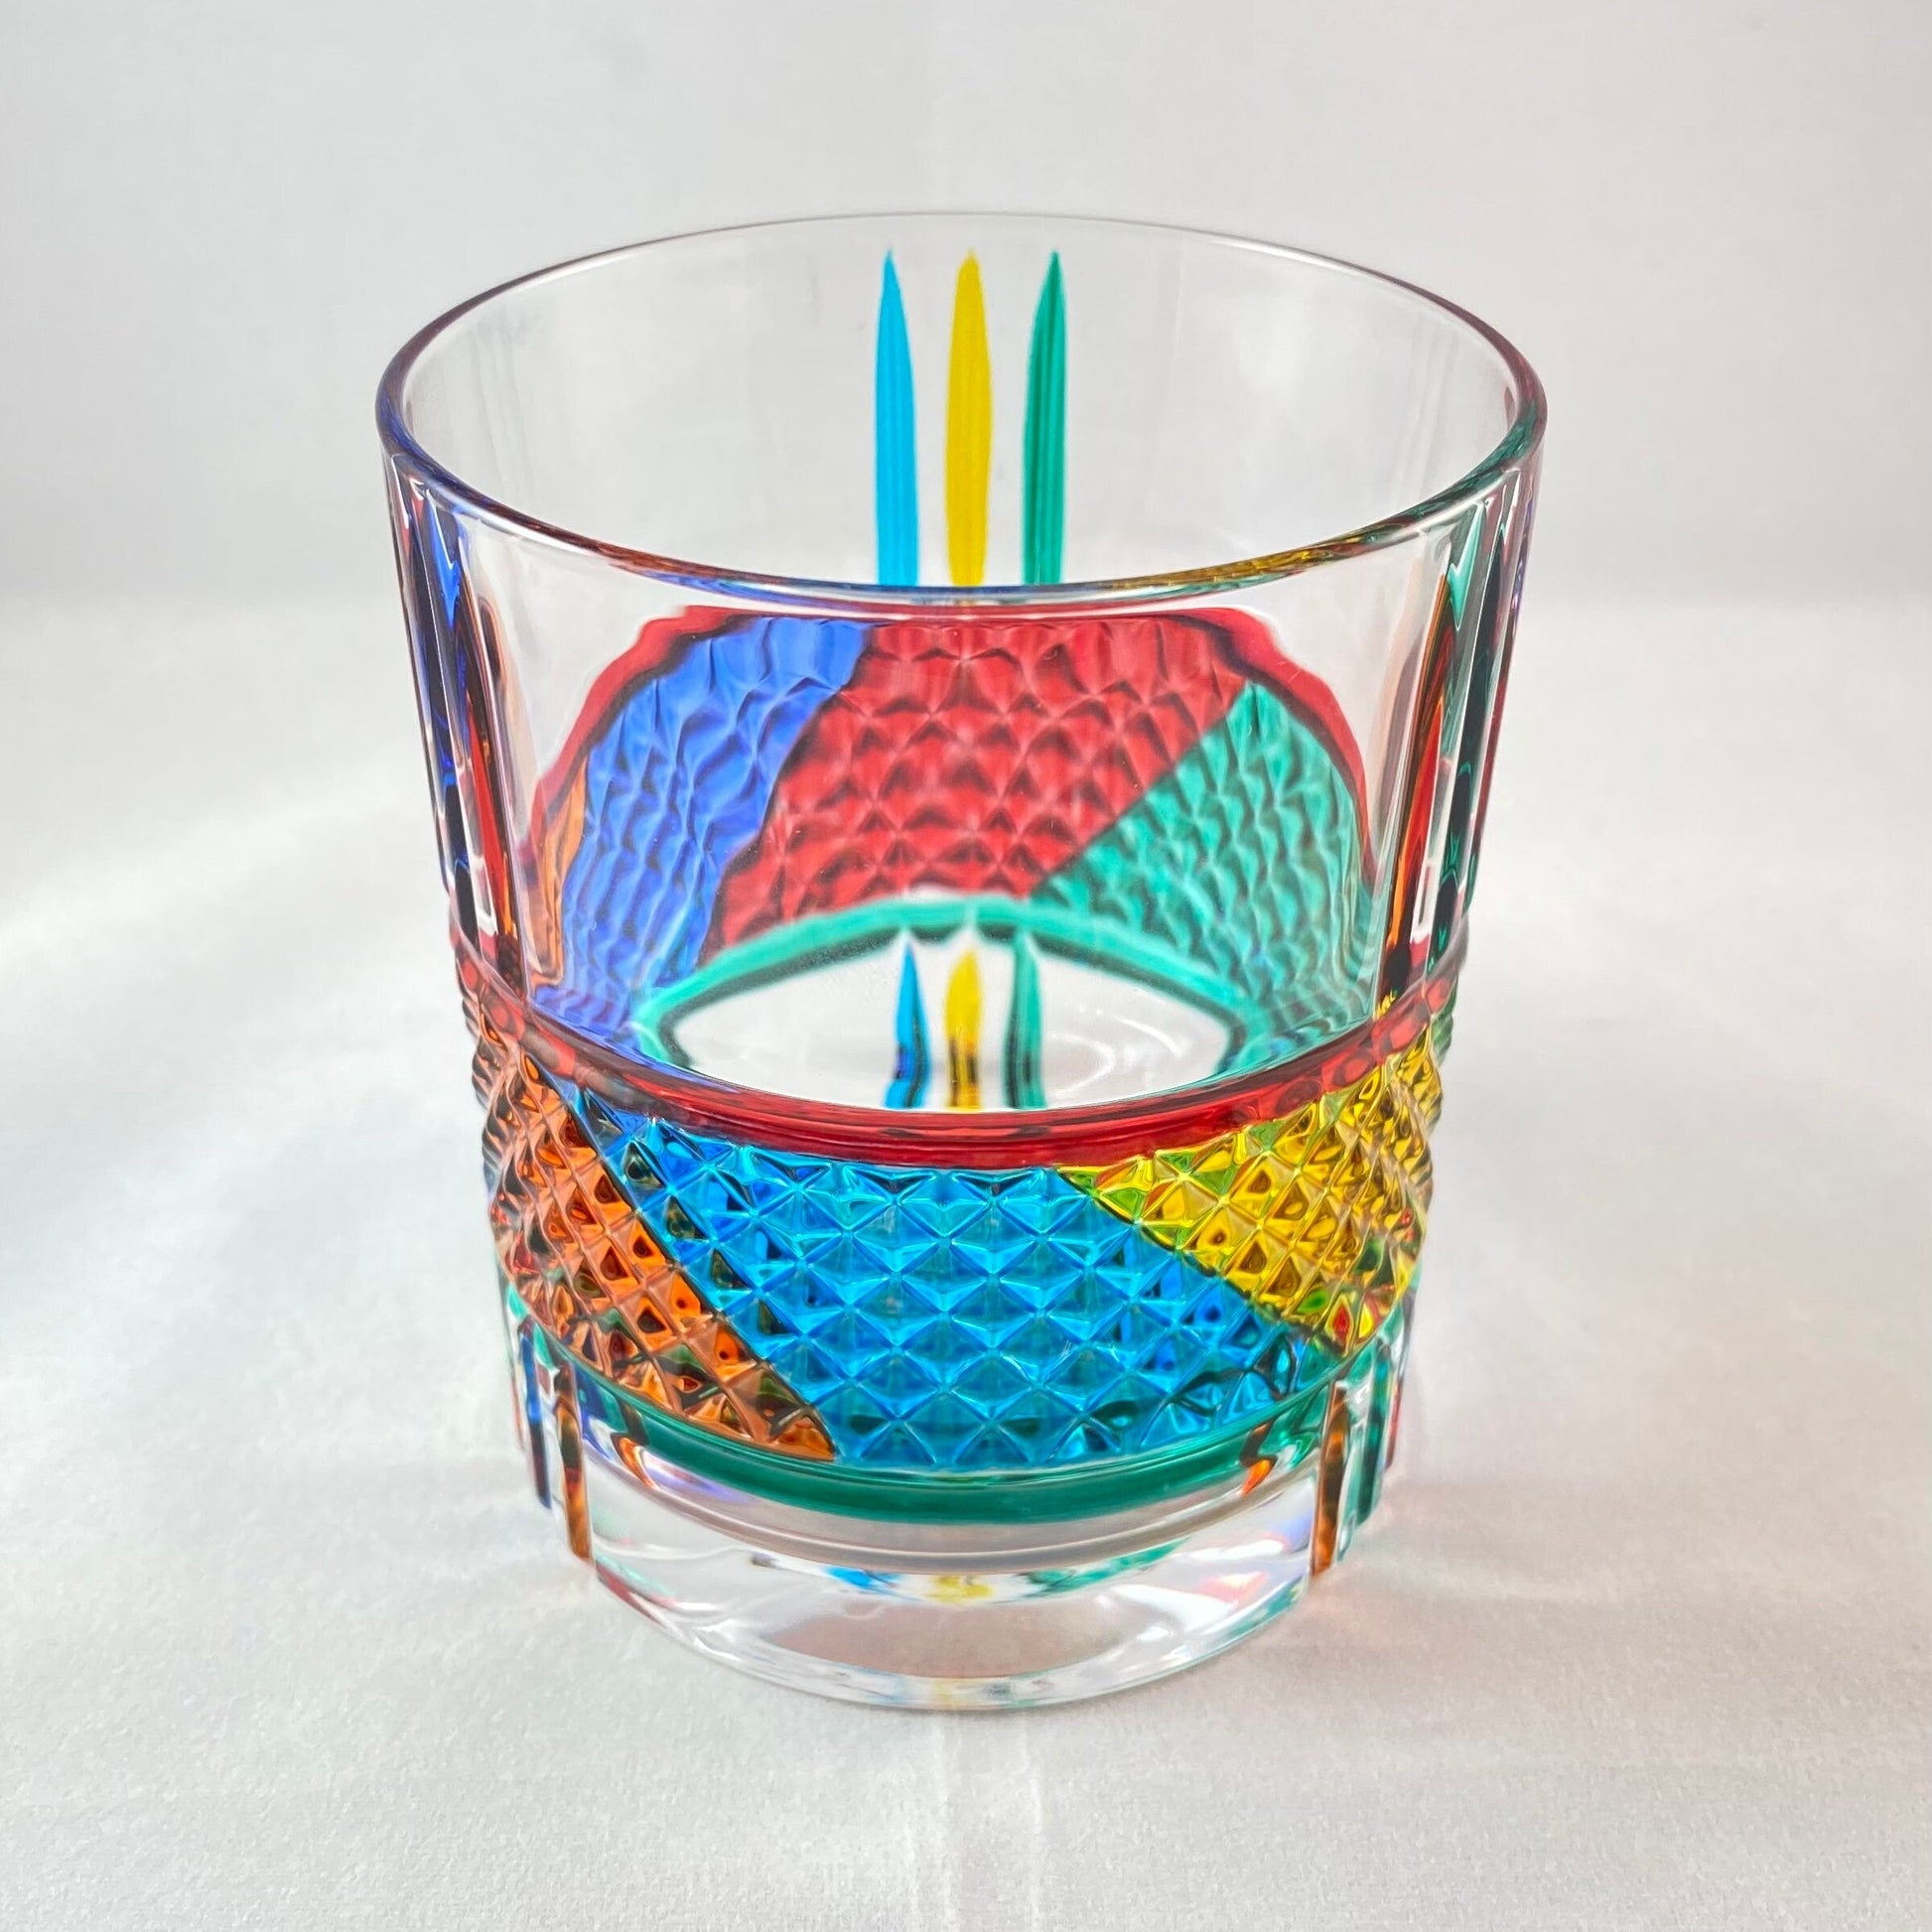 Venetian Glass Tumbler - Handmade in Italy, Colorful Murano Glass